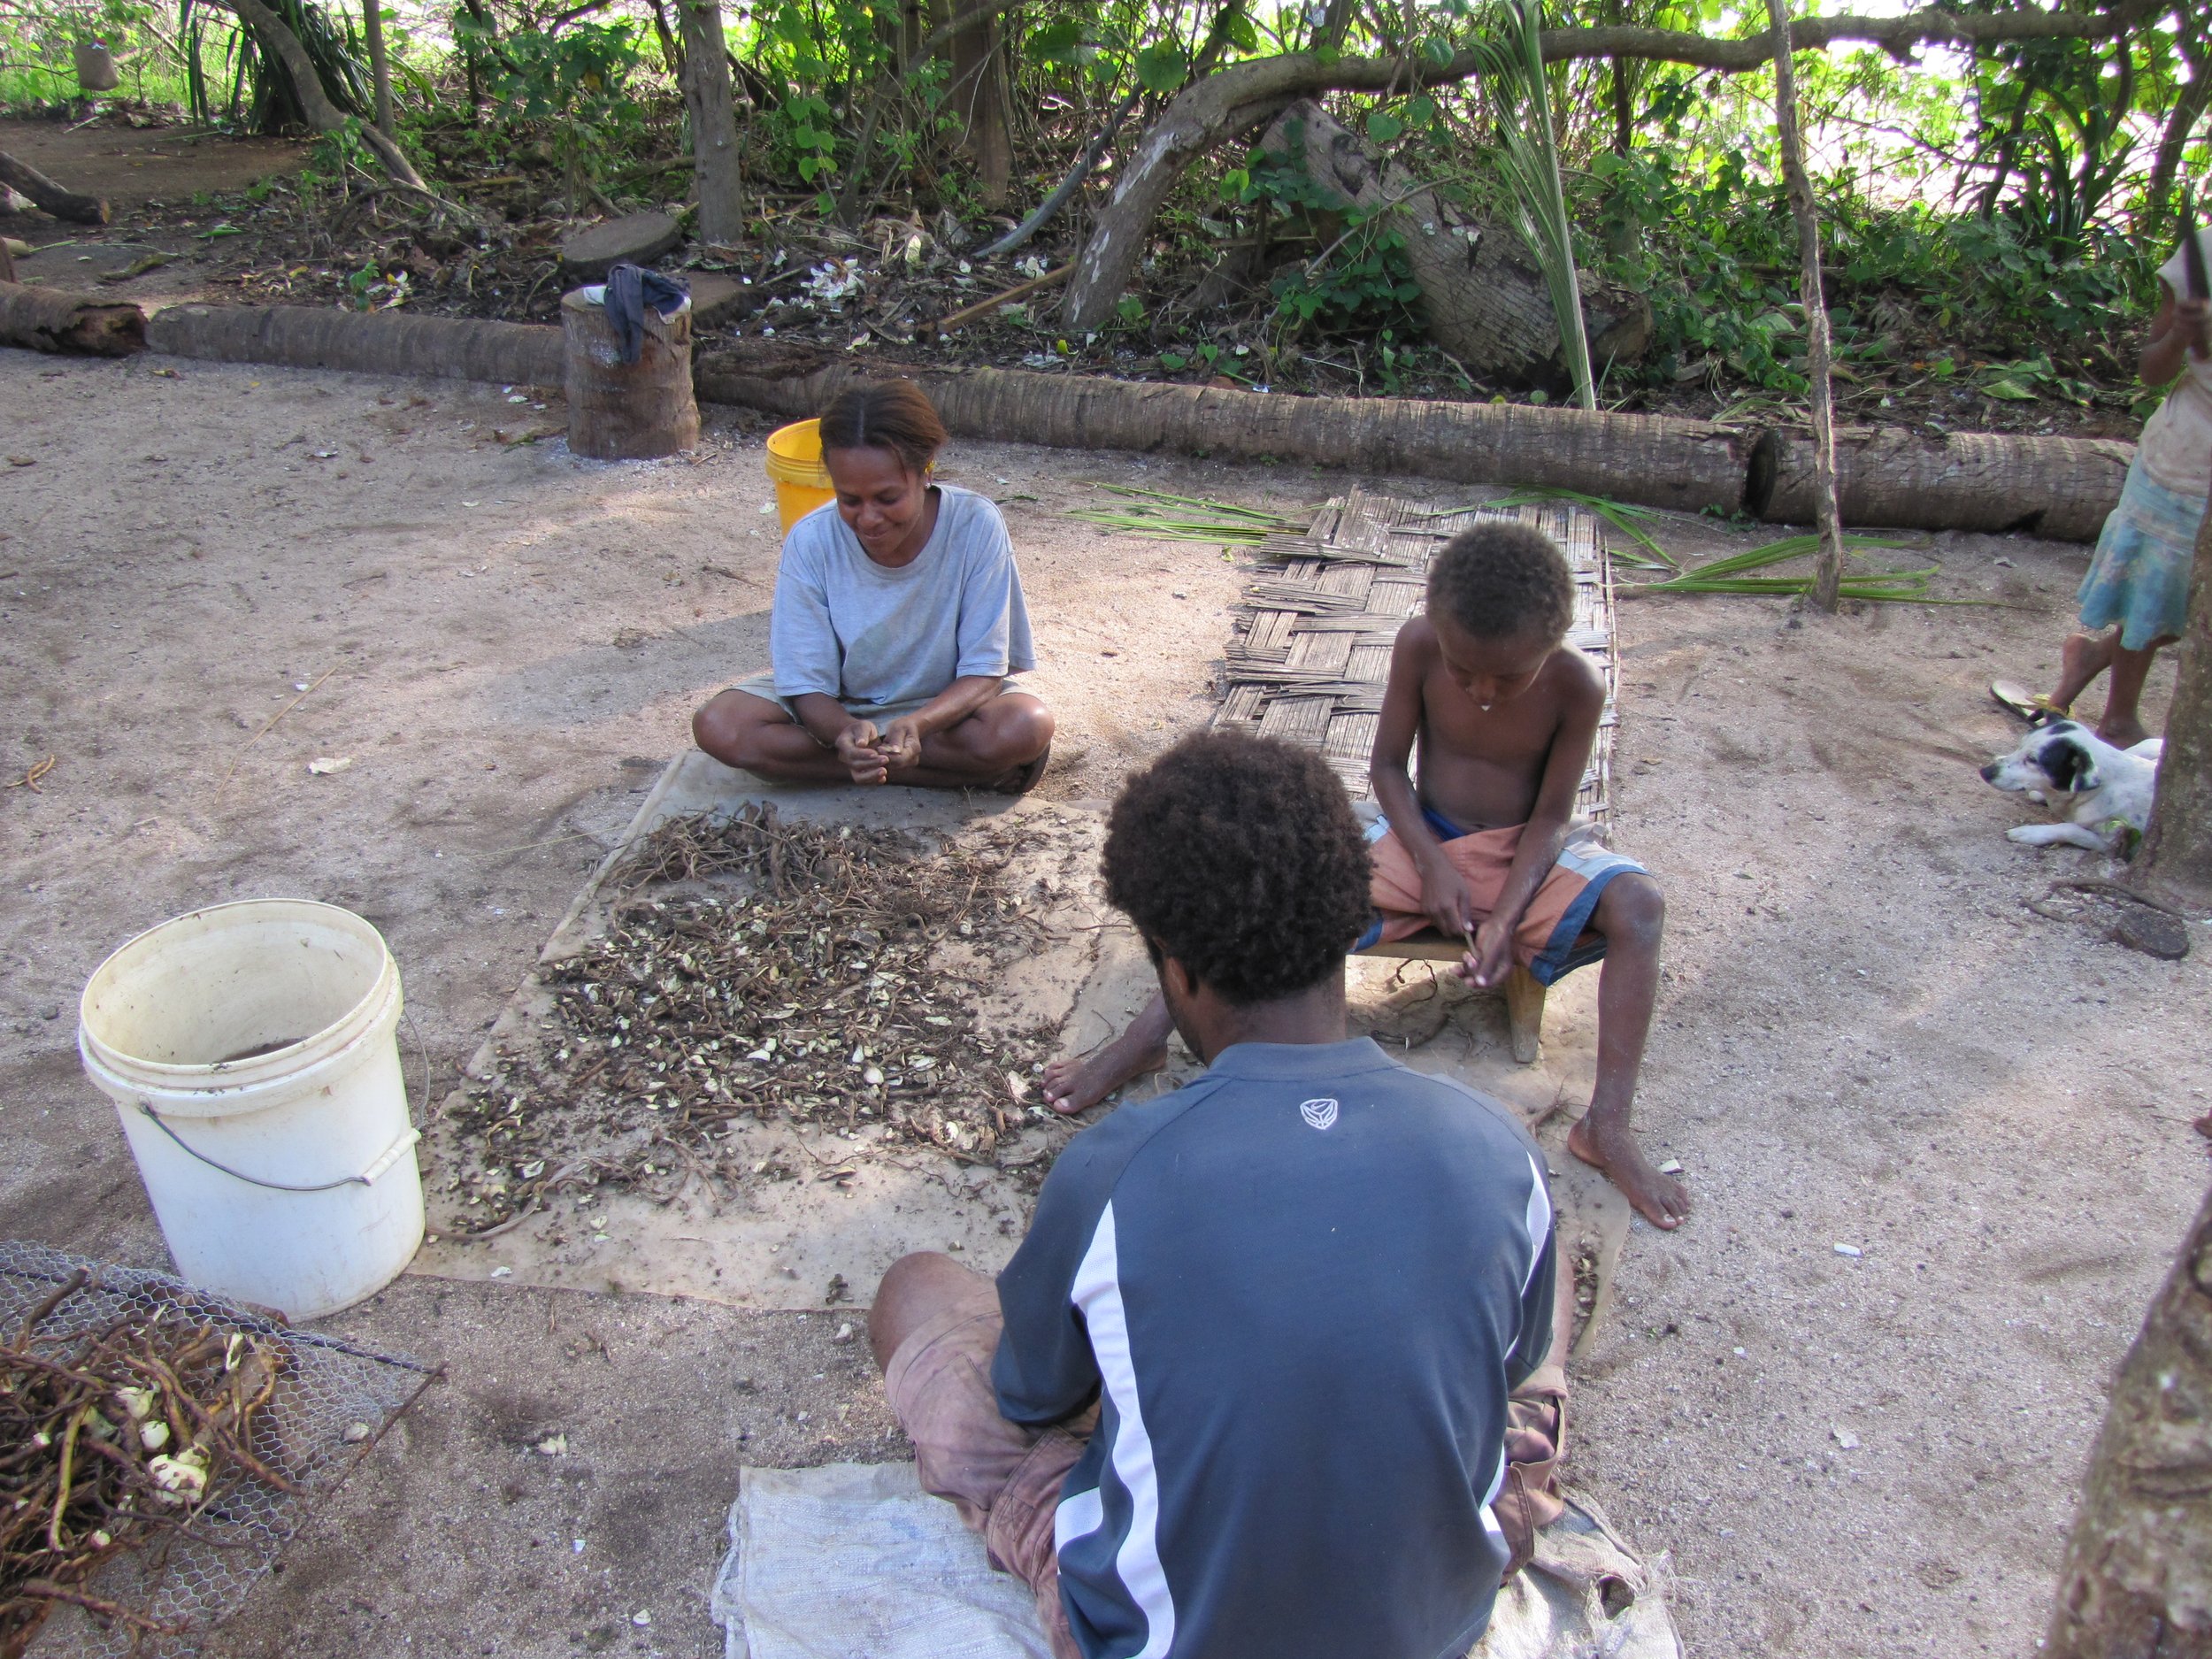 Preparing kava is a community effort.